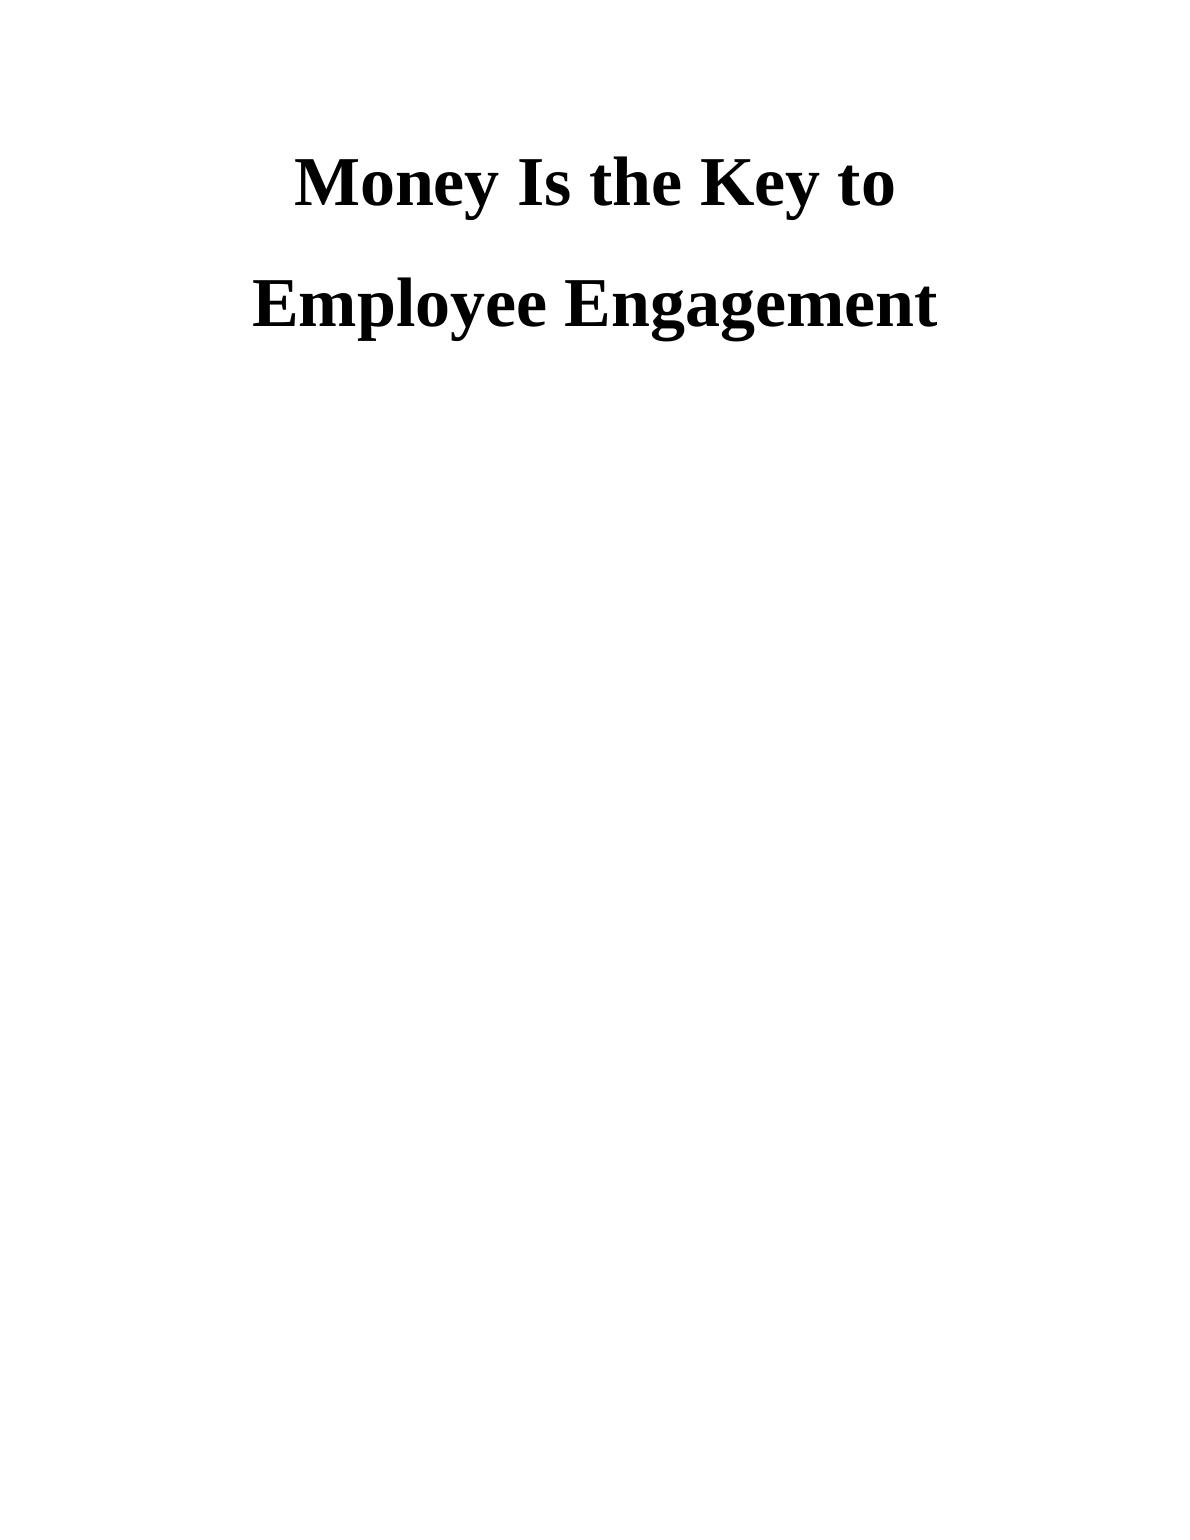 Employee Engagement- Doc_1